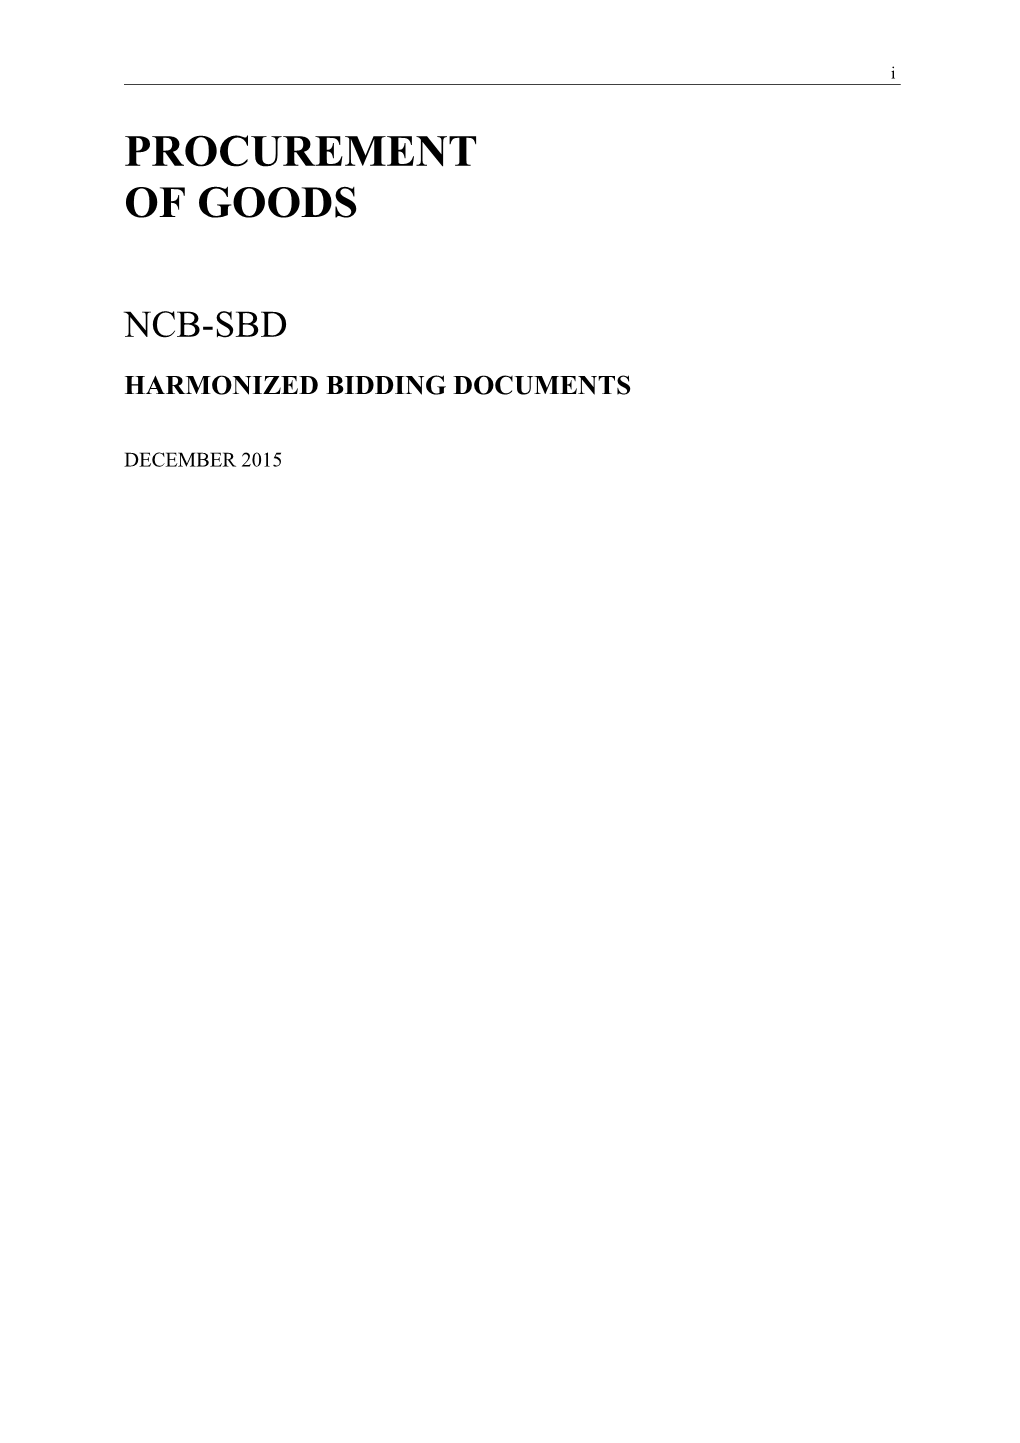 Standard Bidding Documents s5